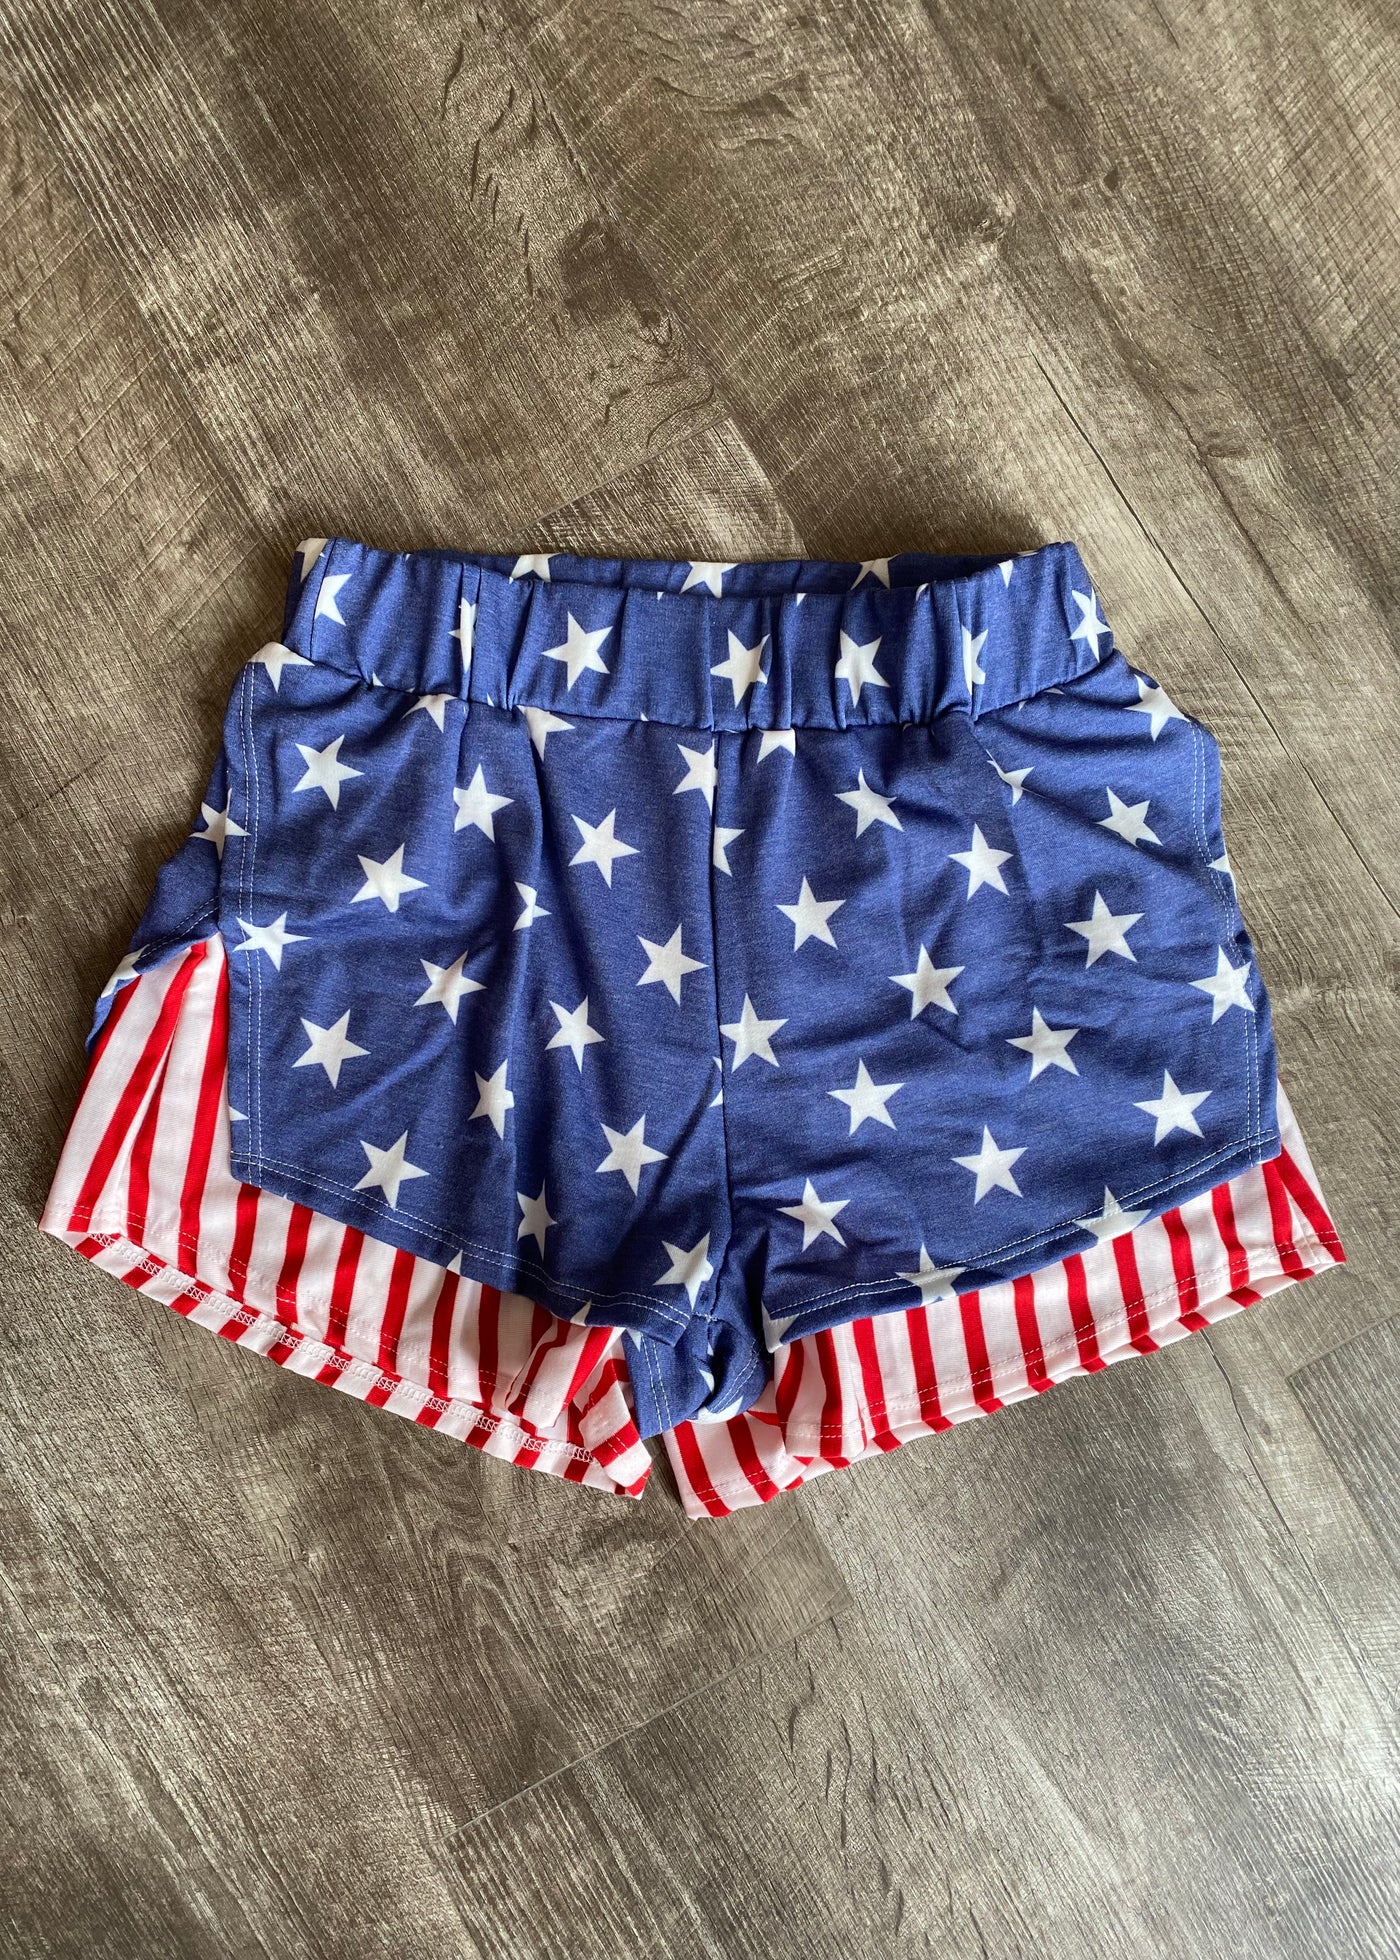 All American Shorts